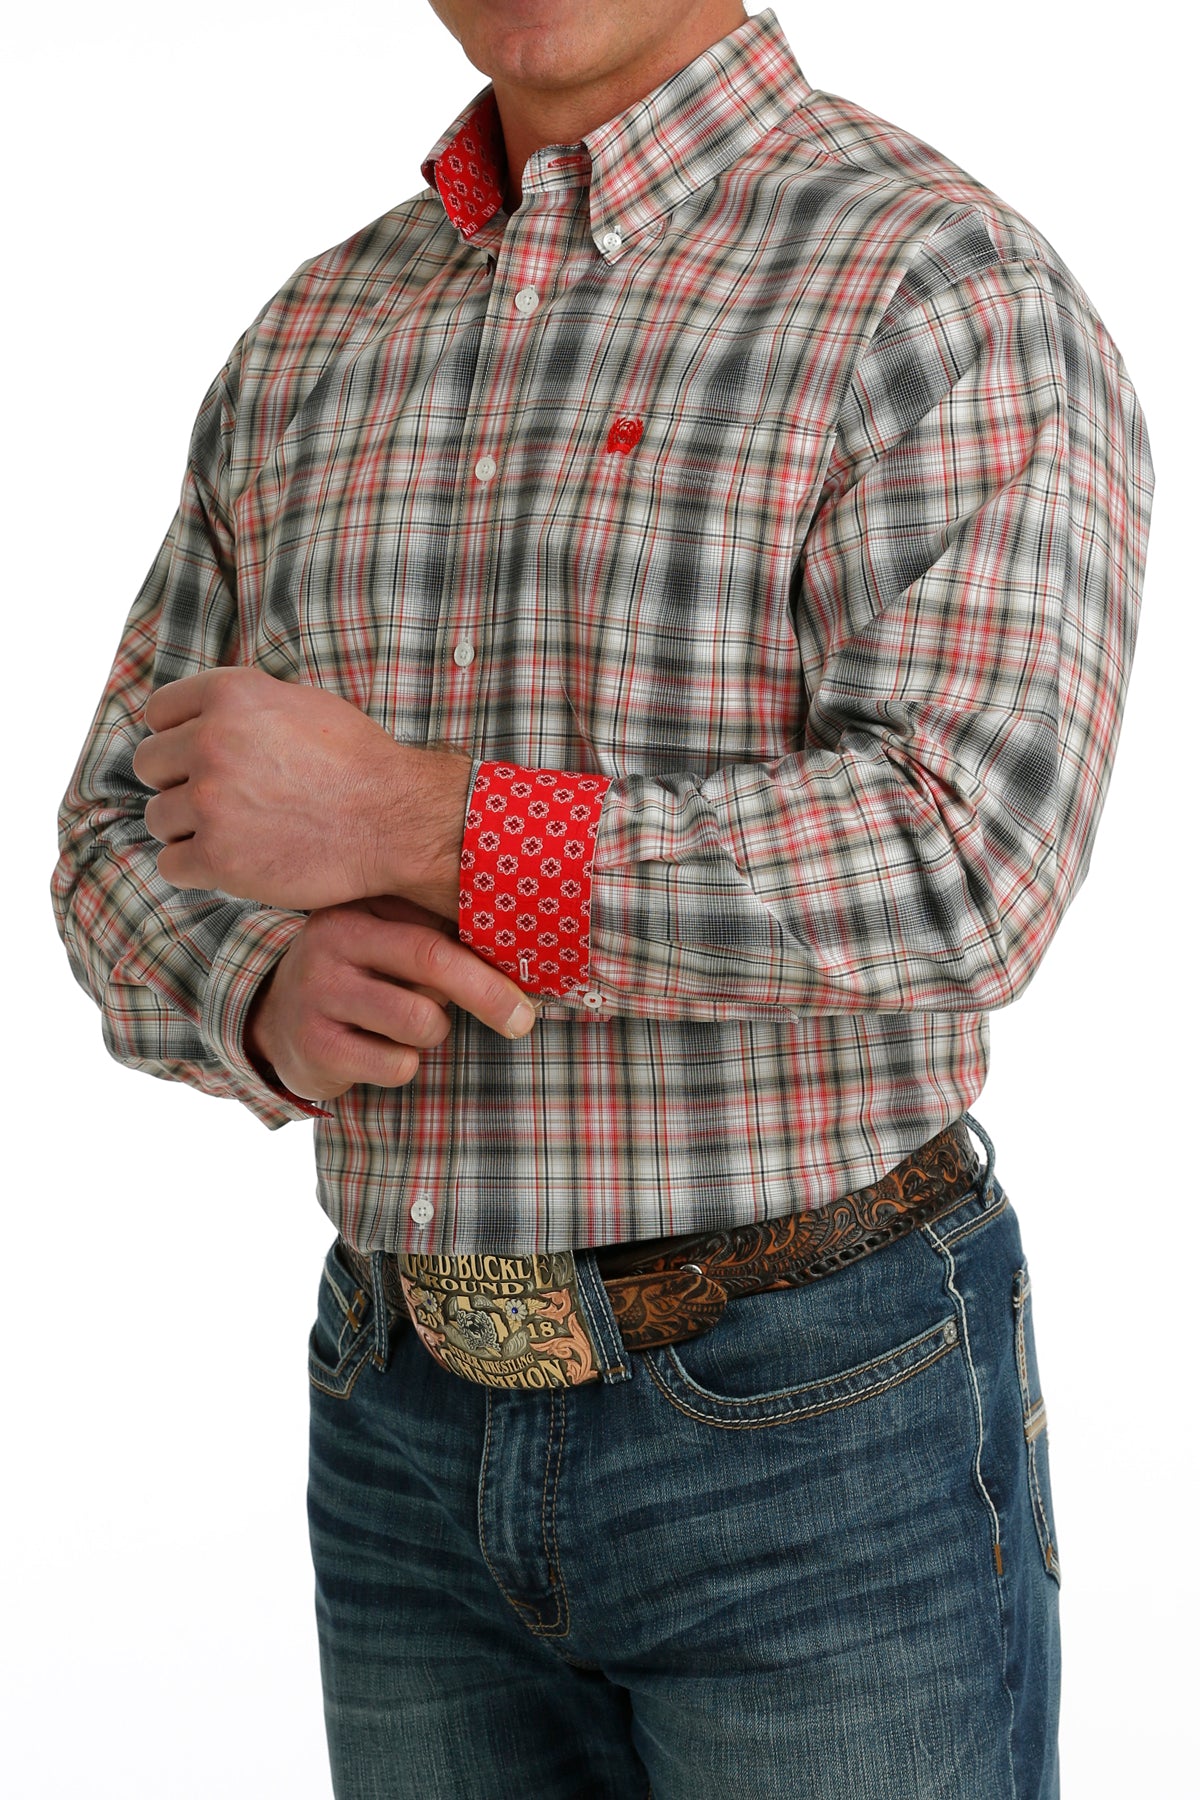 Cinch Men's Red/Black/White/Khaki Plaid Button-Down Western Shirt